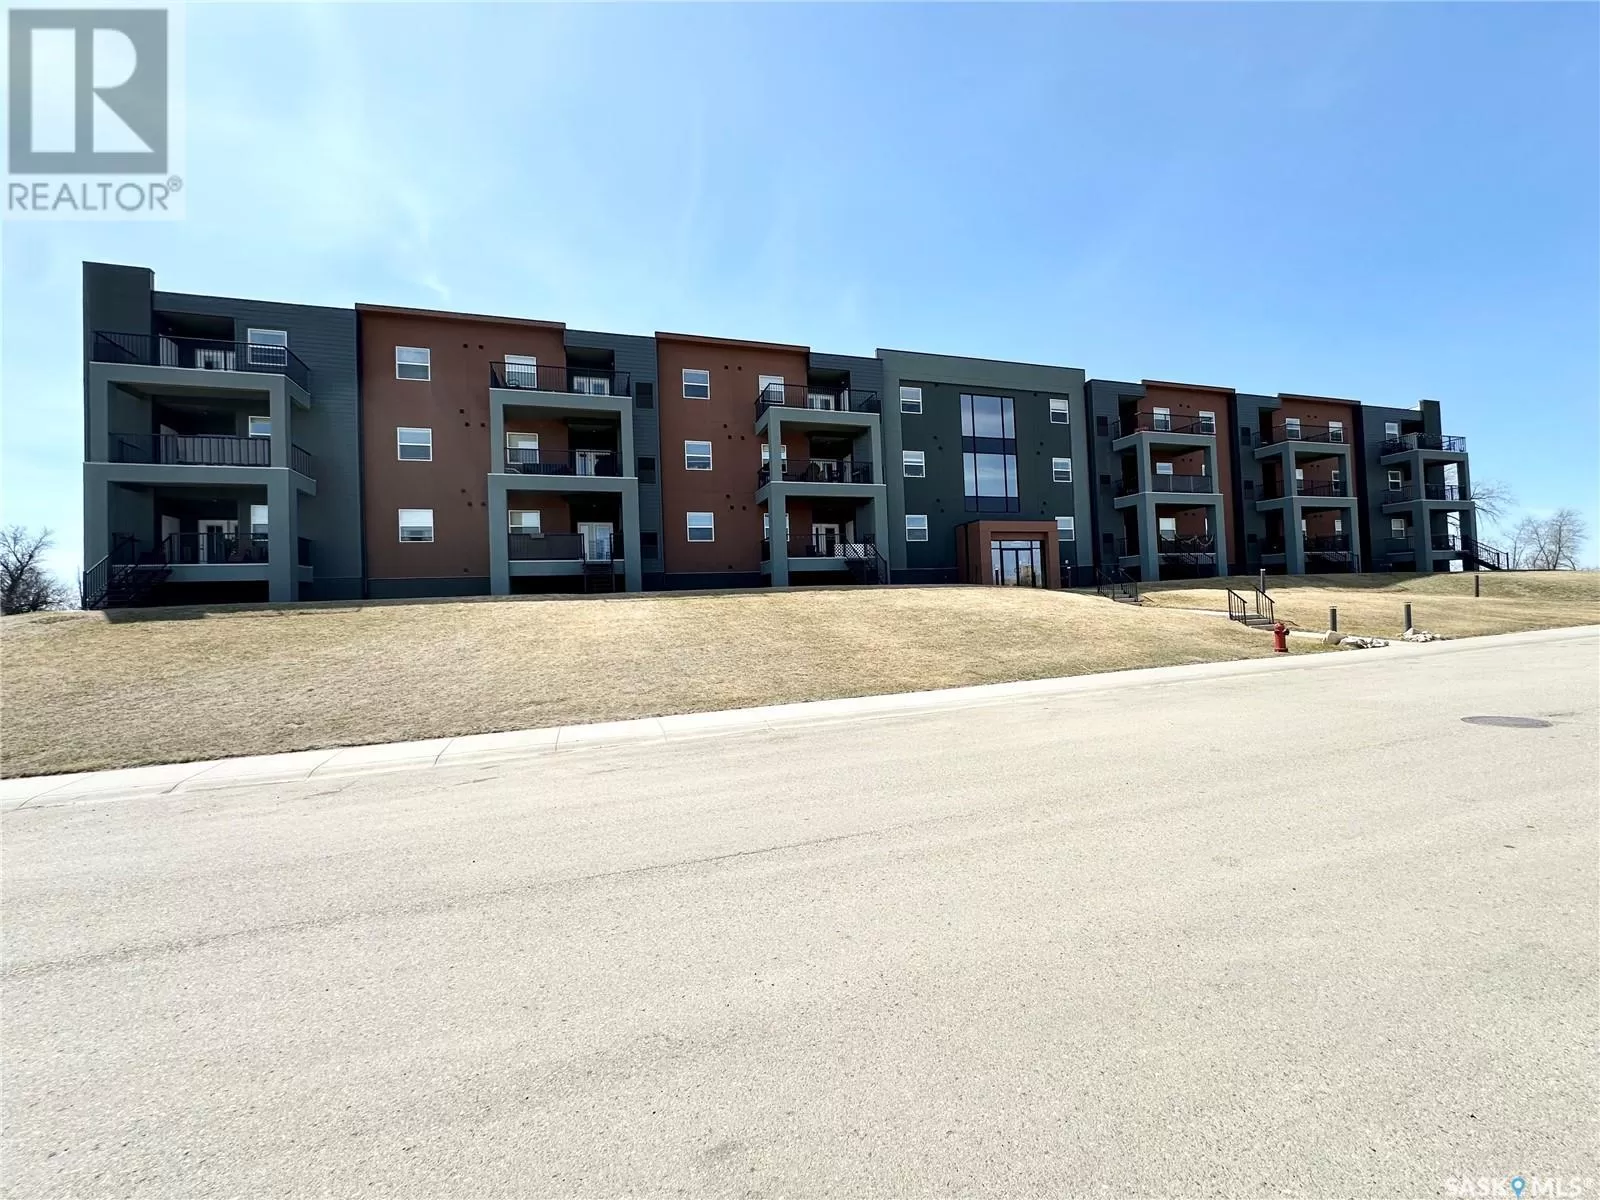 Apartment for rent: 104 71 Riverwood Drive, Weyburn, Saskatchewan S4H 3P8